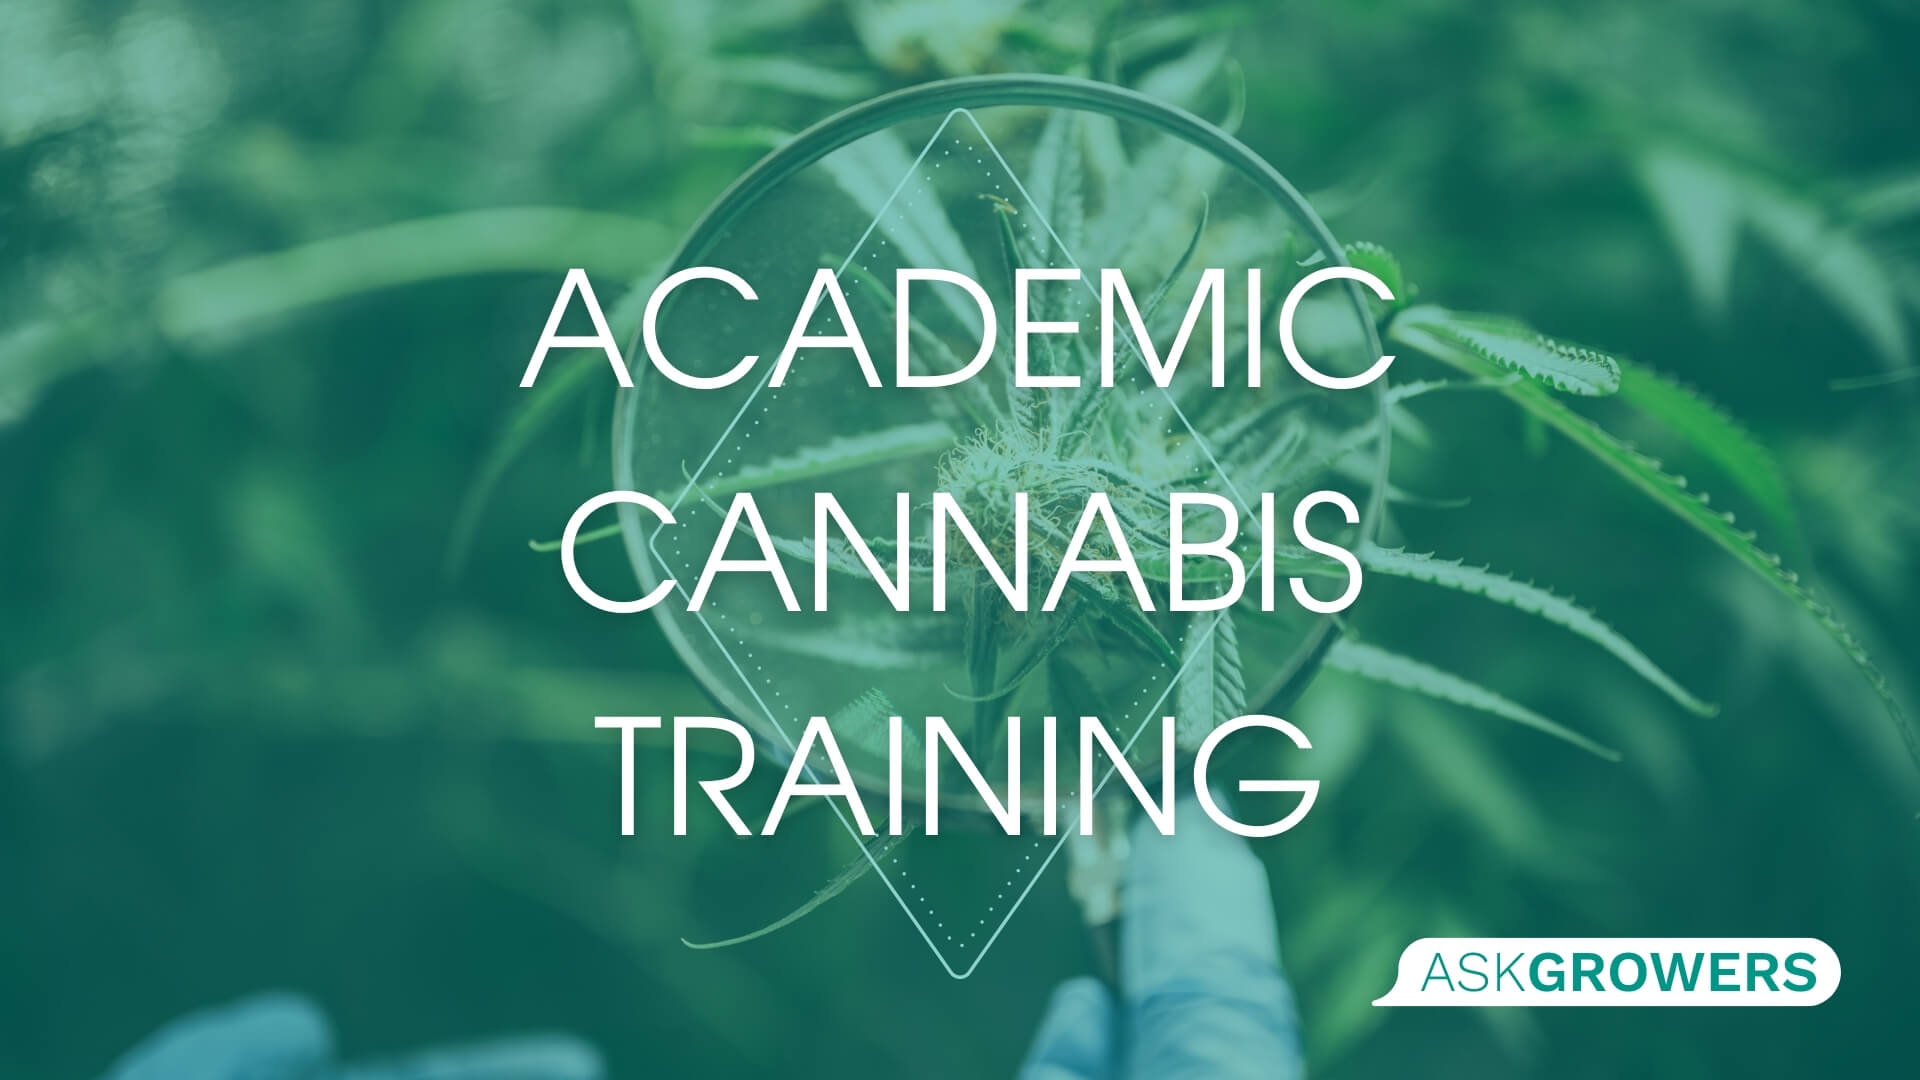 Academically Trained Cannabis Pros